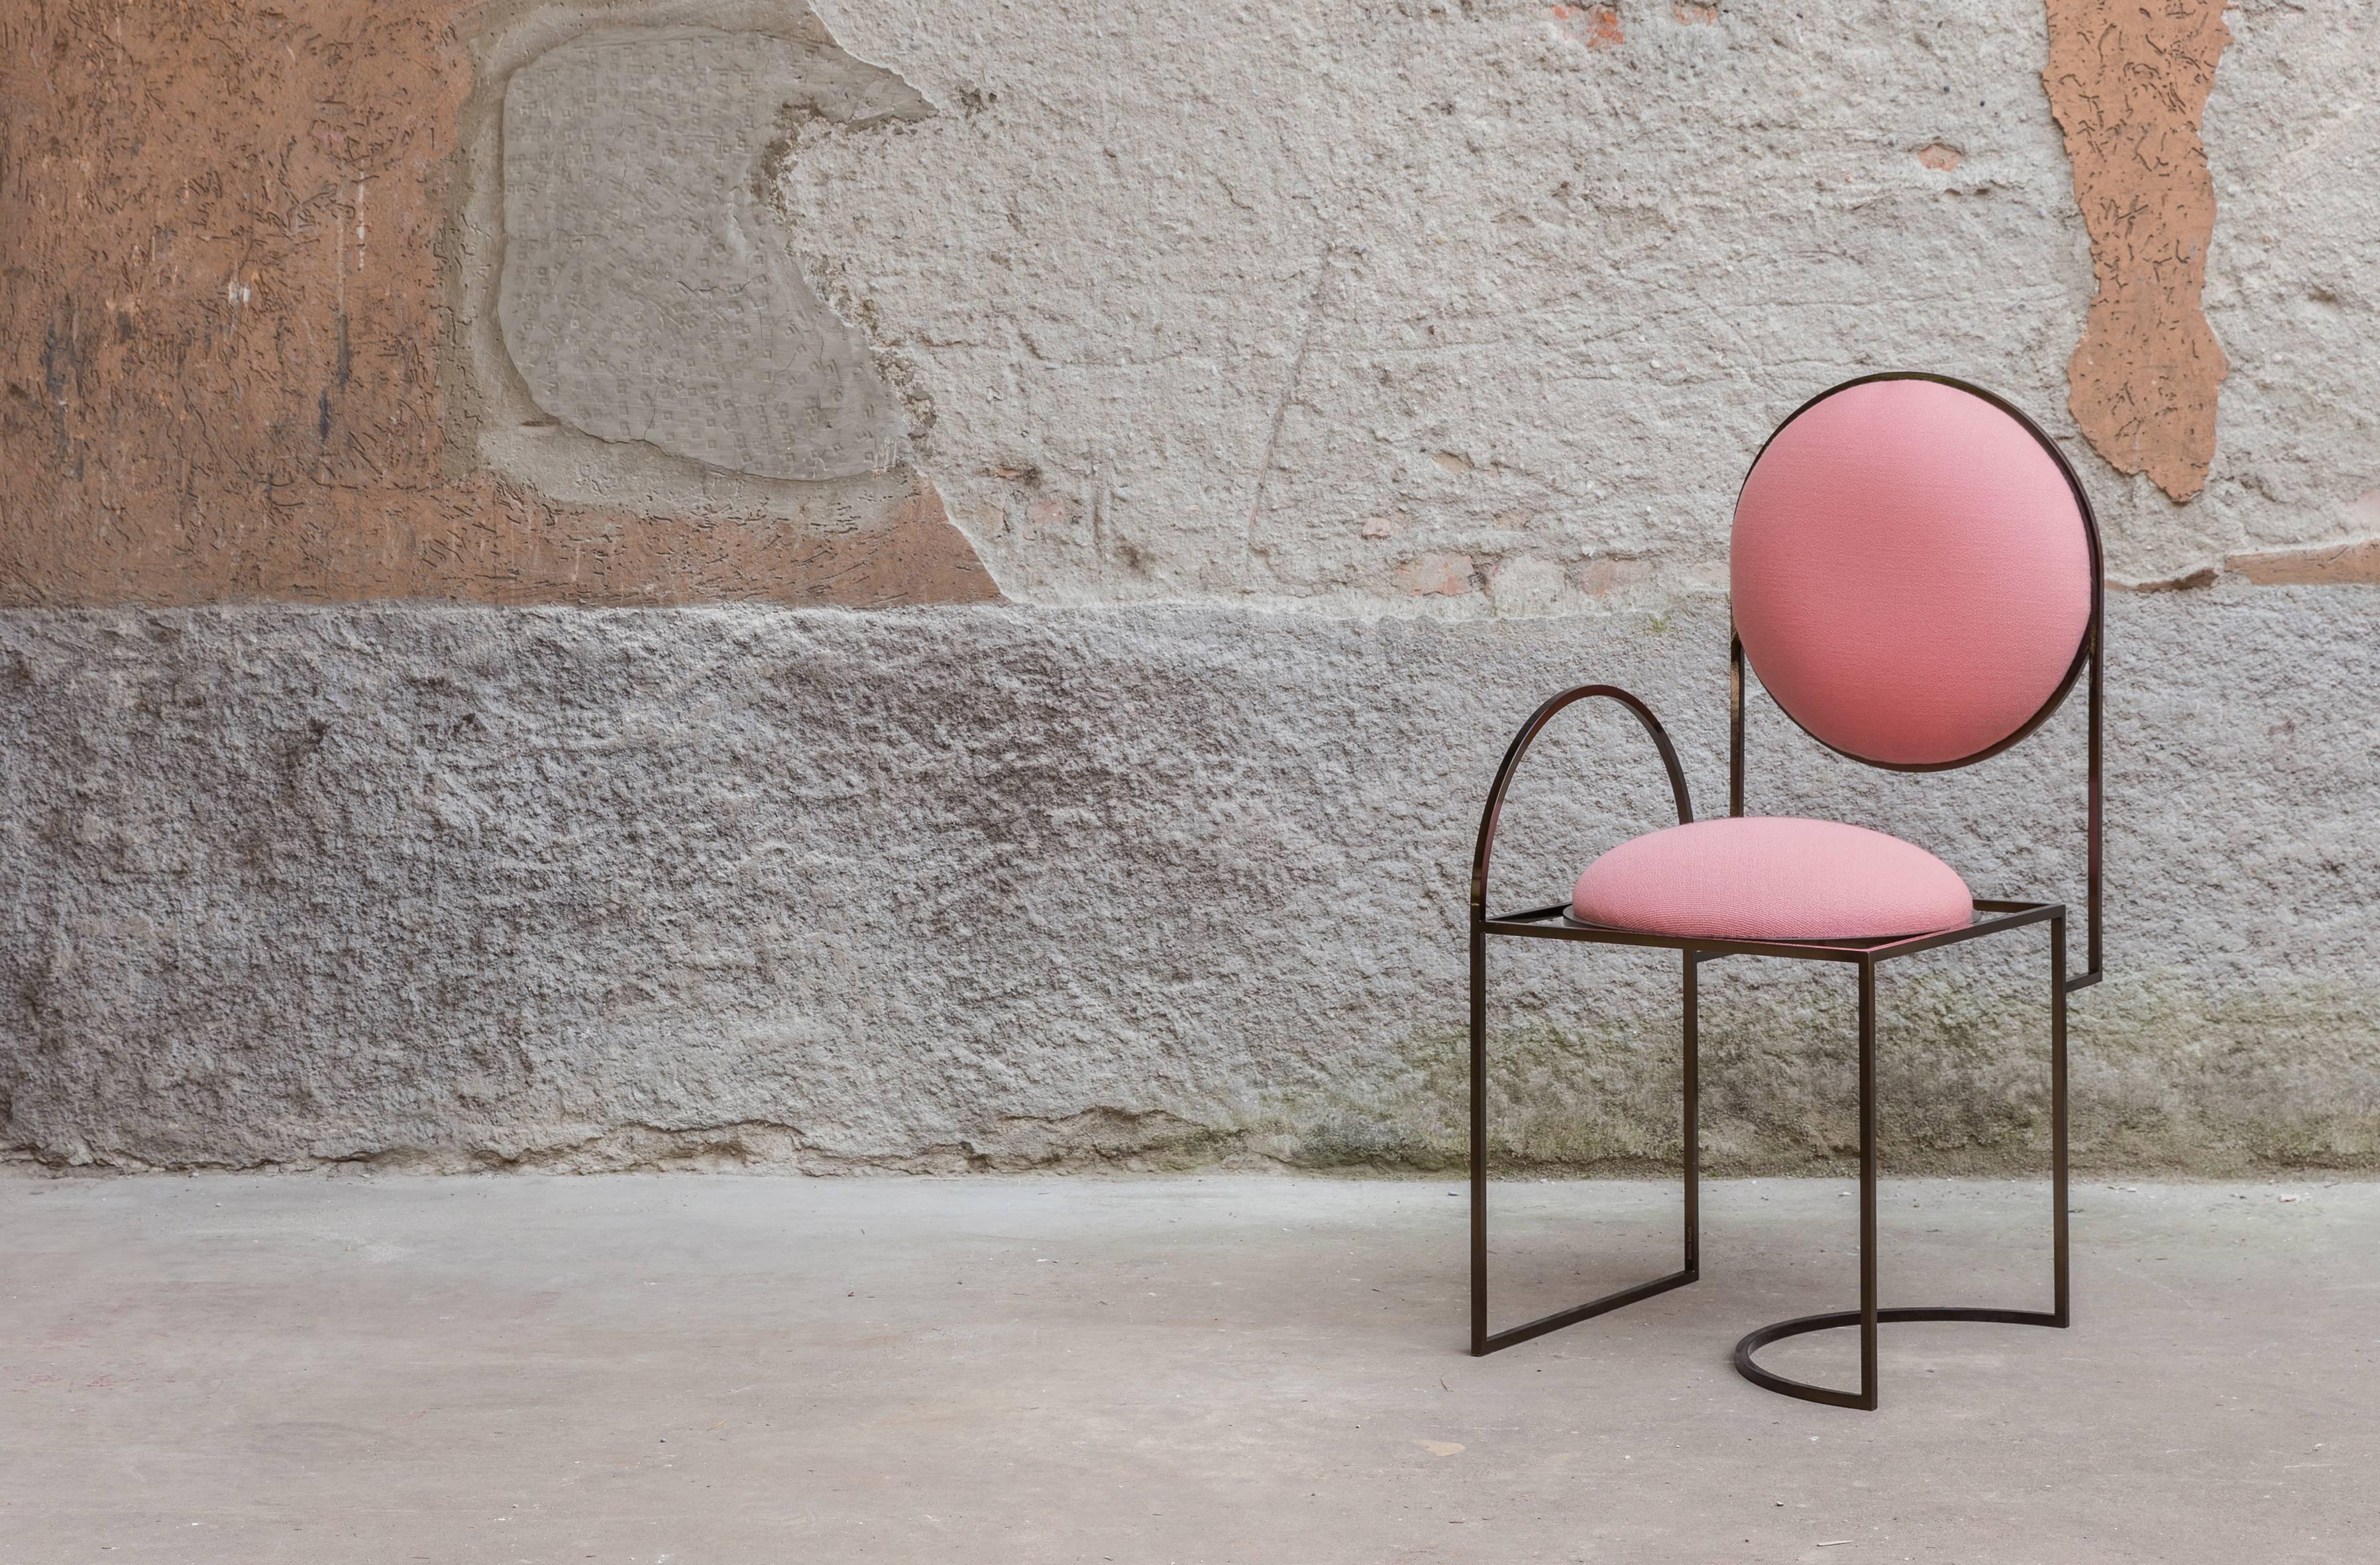 Modern Solar Chair in Pink by Lara Bohinc